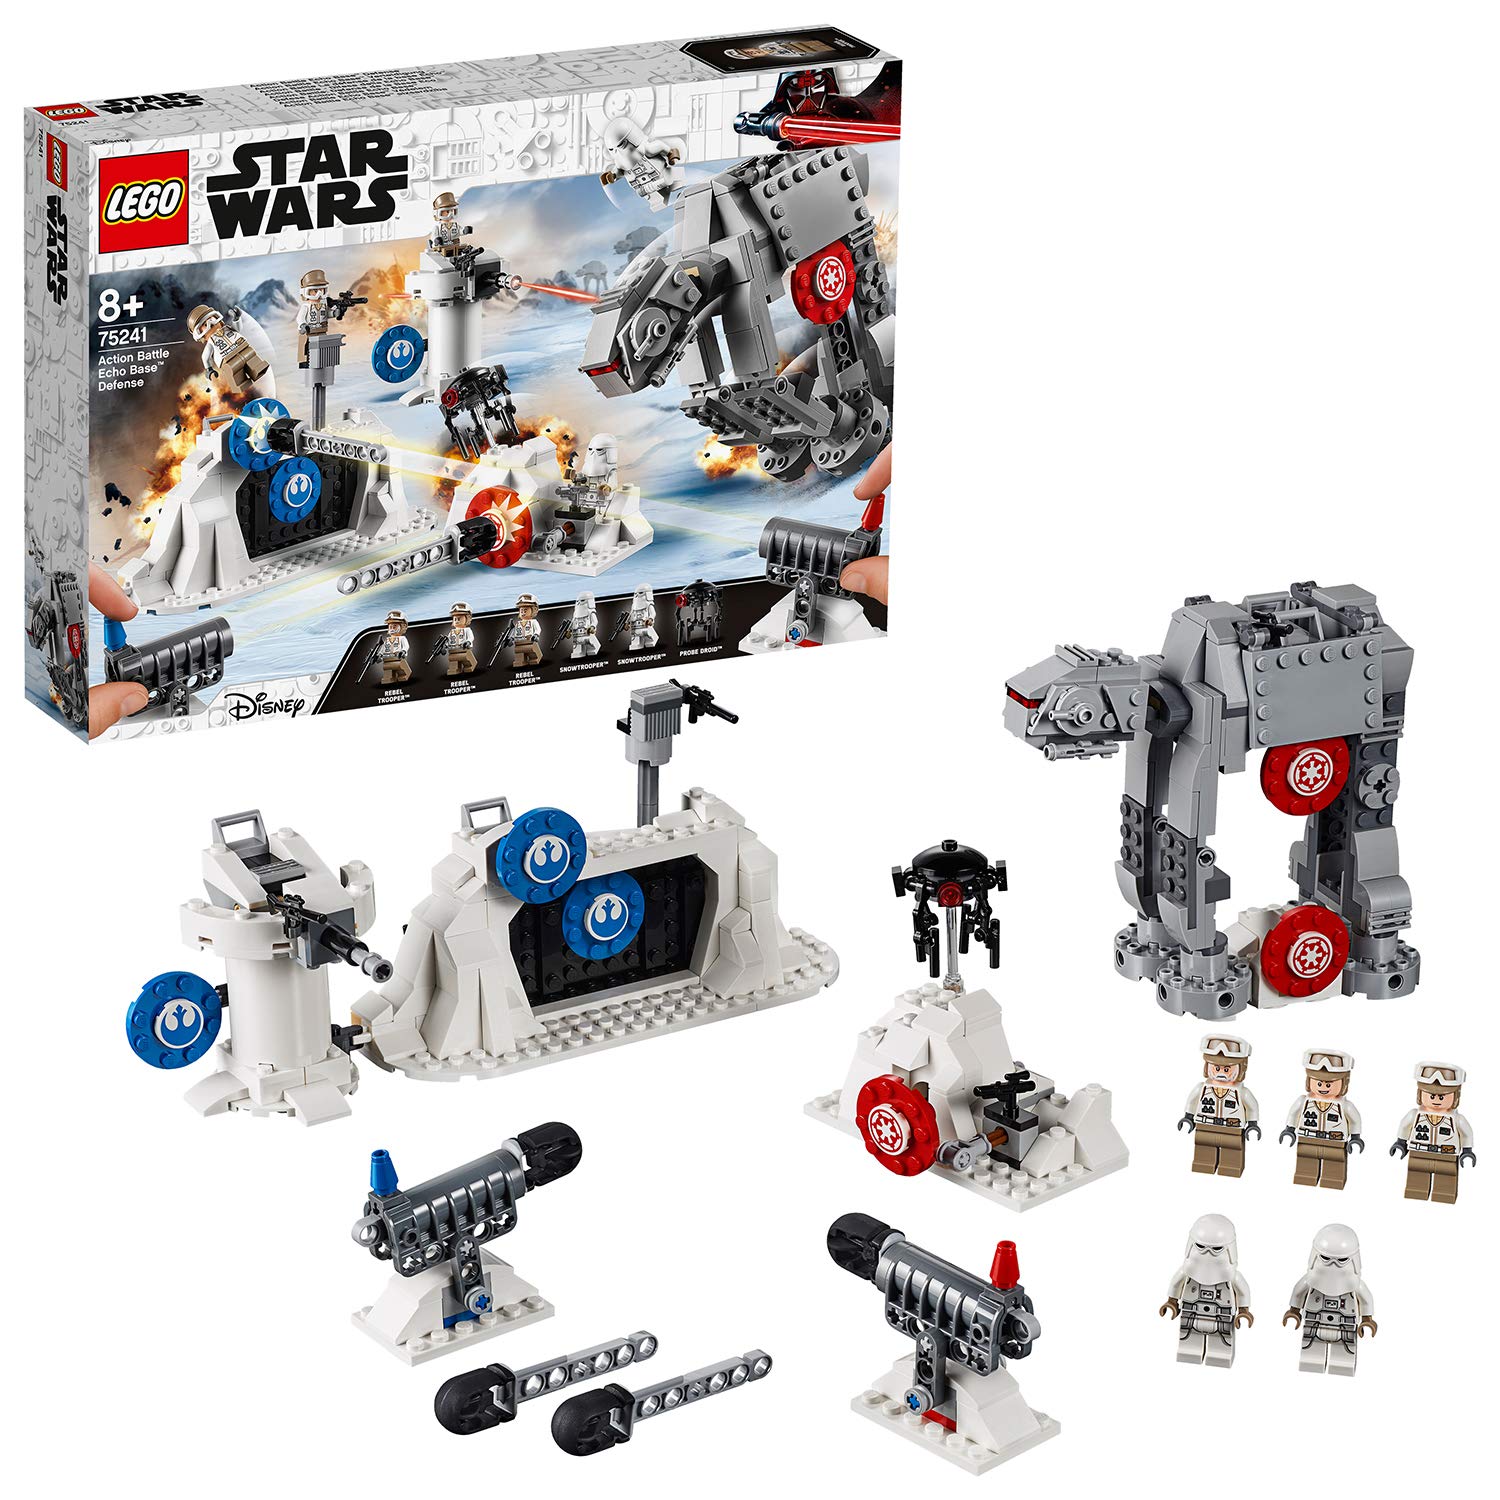 Lego Star Wars 75241 - The Empire Strikes Back Action Battle Echo Base Defe